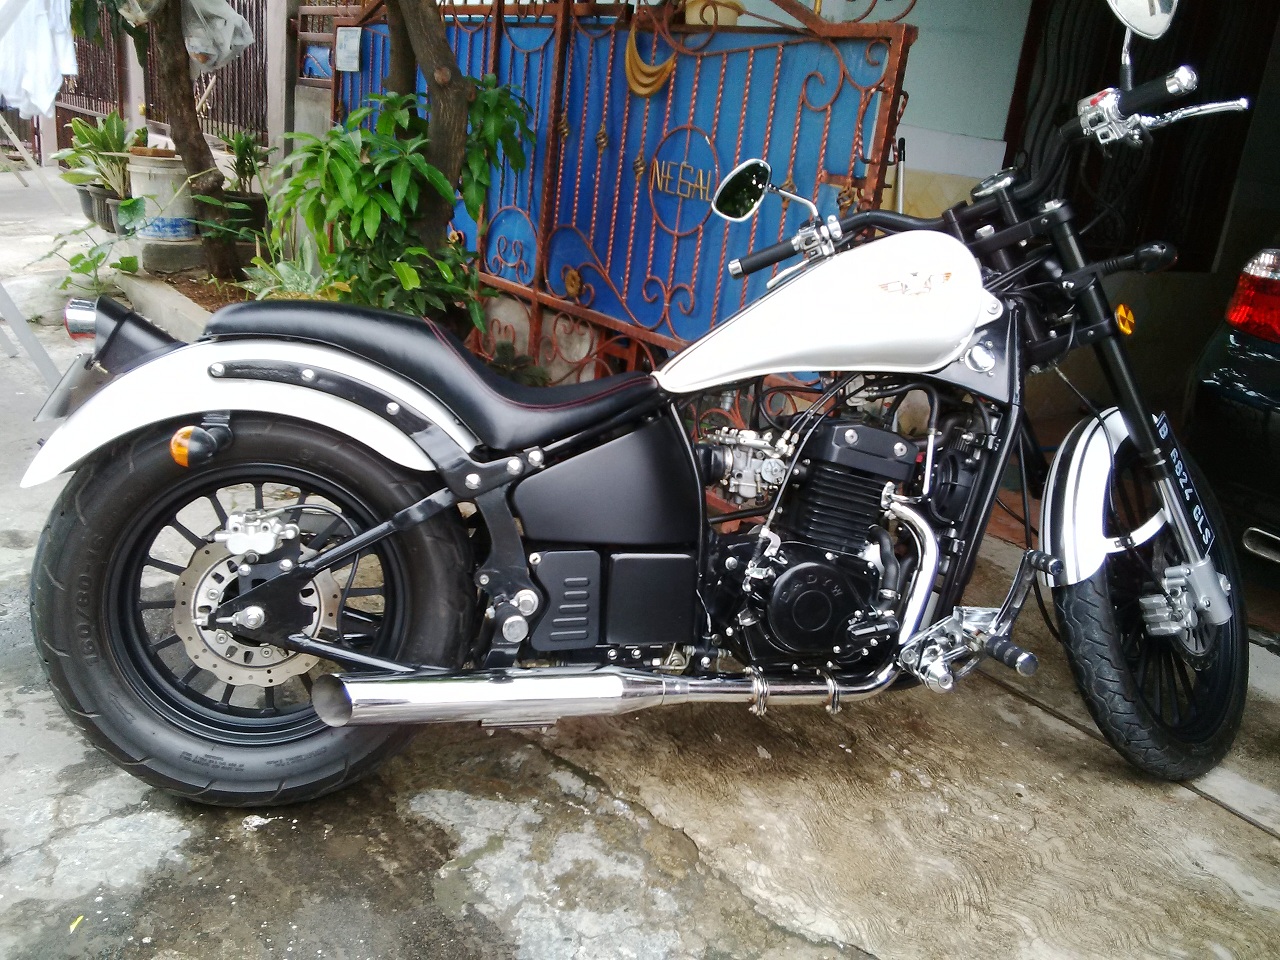 Jual motor Chop Harley Taiwan